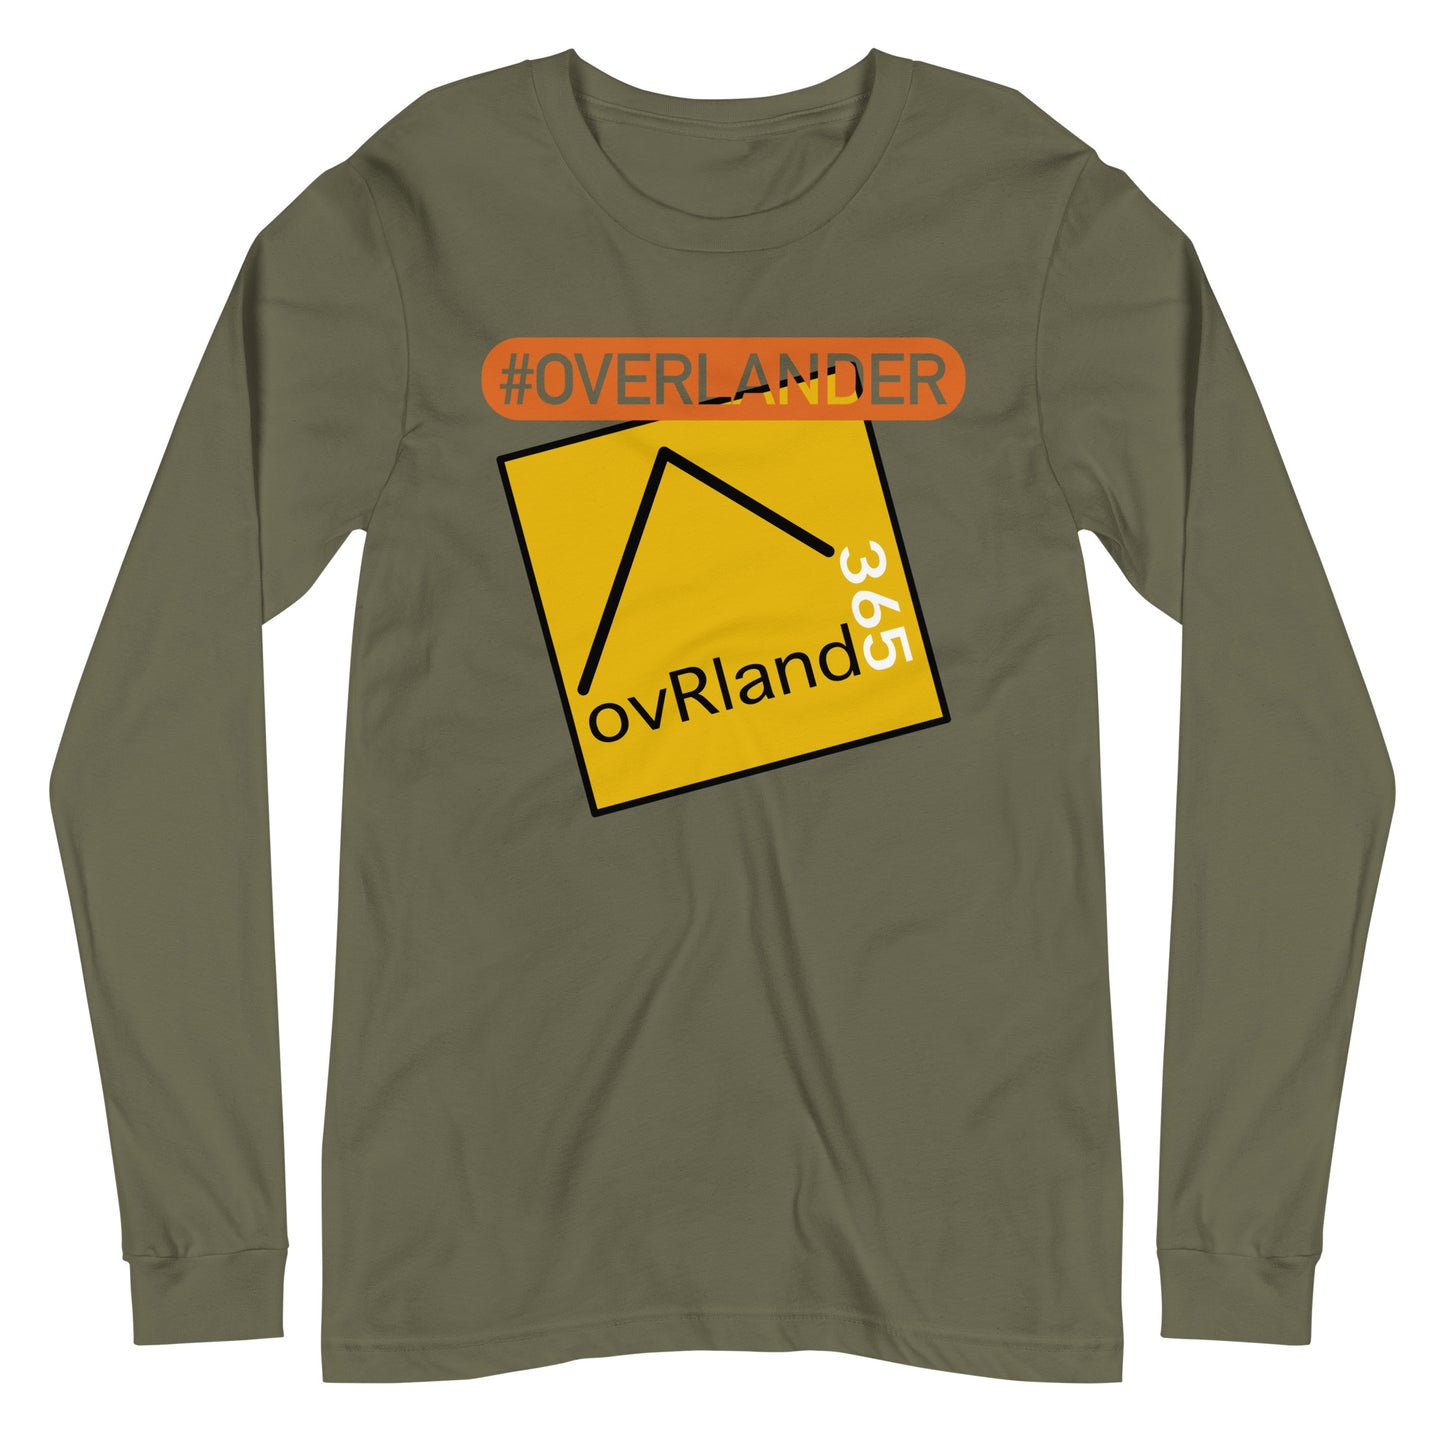 #overlander overlanding long-sleeve, green. overland365.com